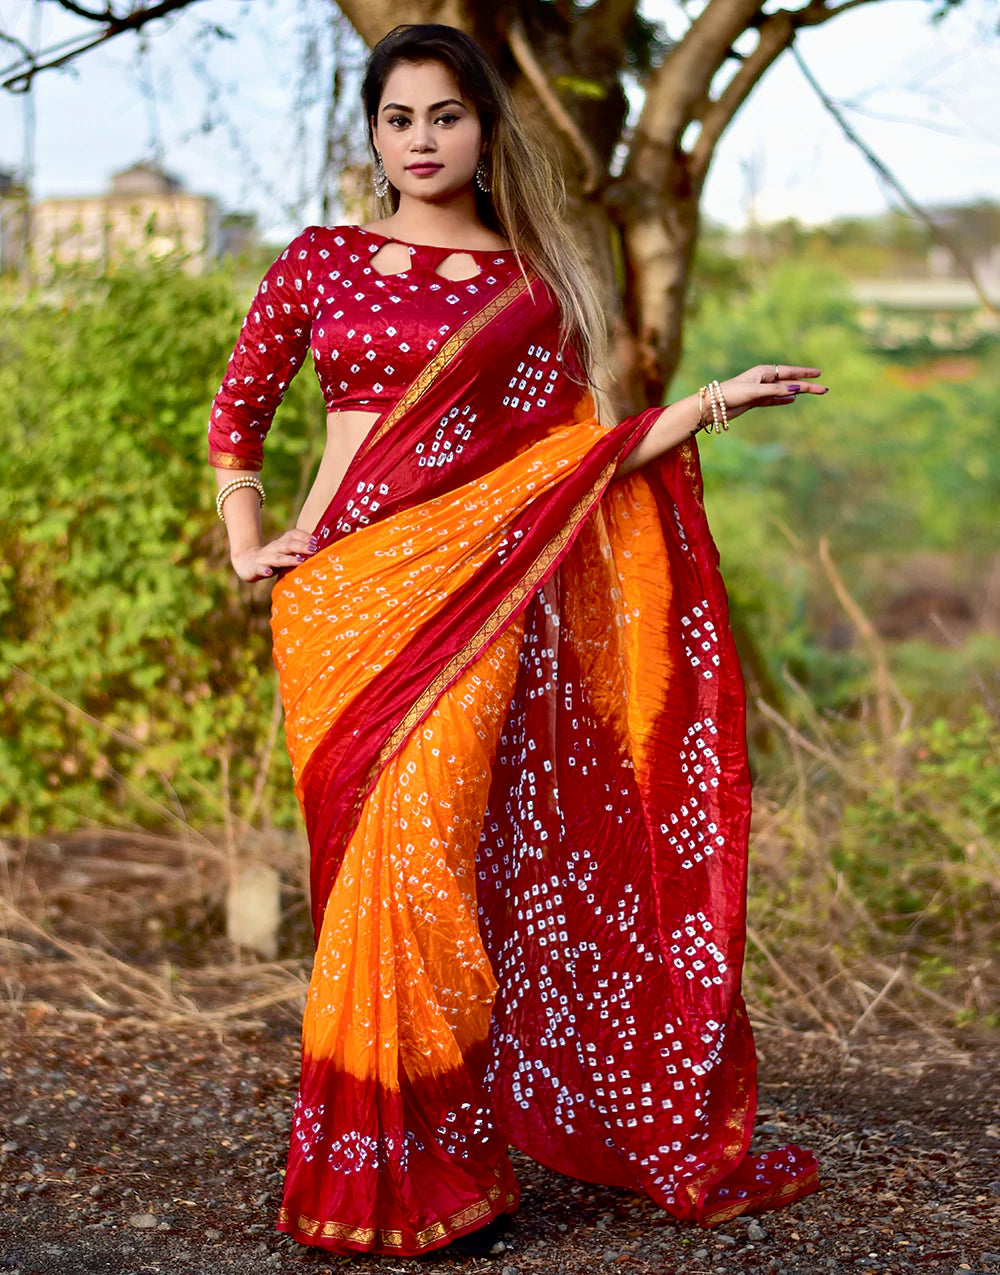 How to style bandhini saris? 5 Bollywood celebrities show you how to style  bandhini saris | Vogue India